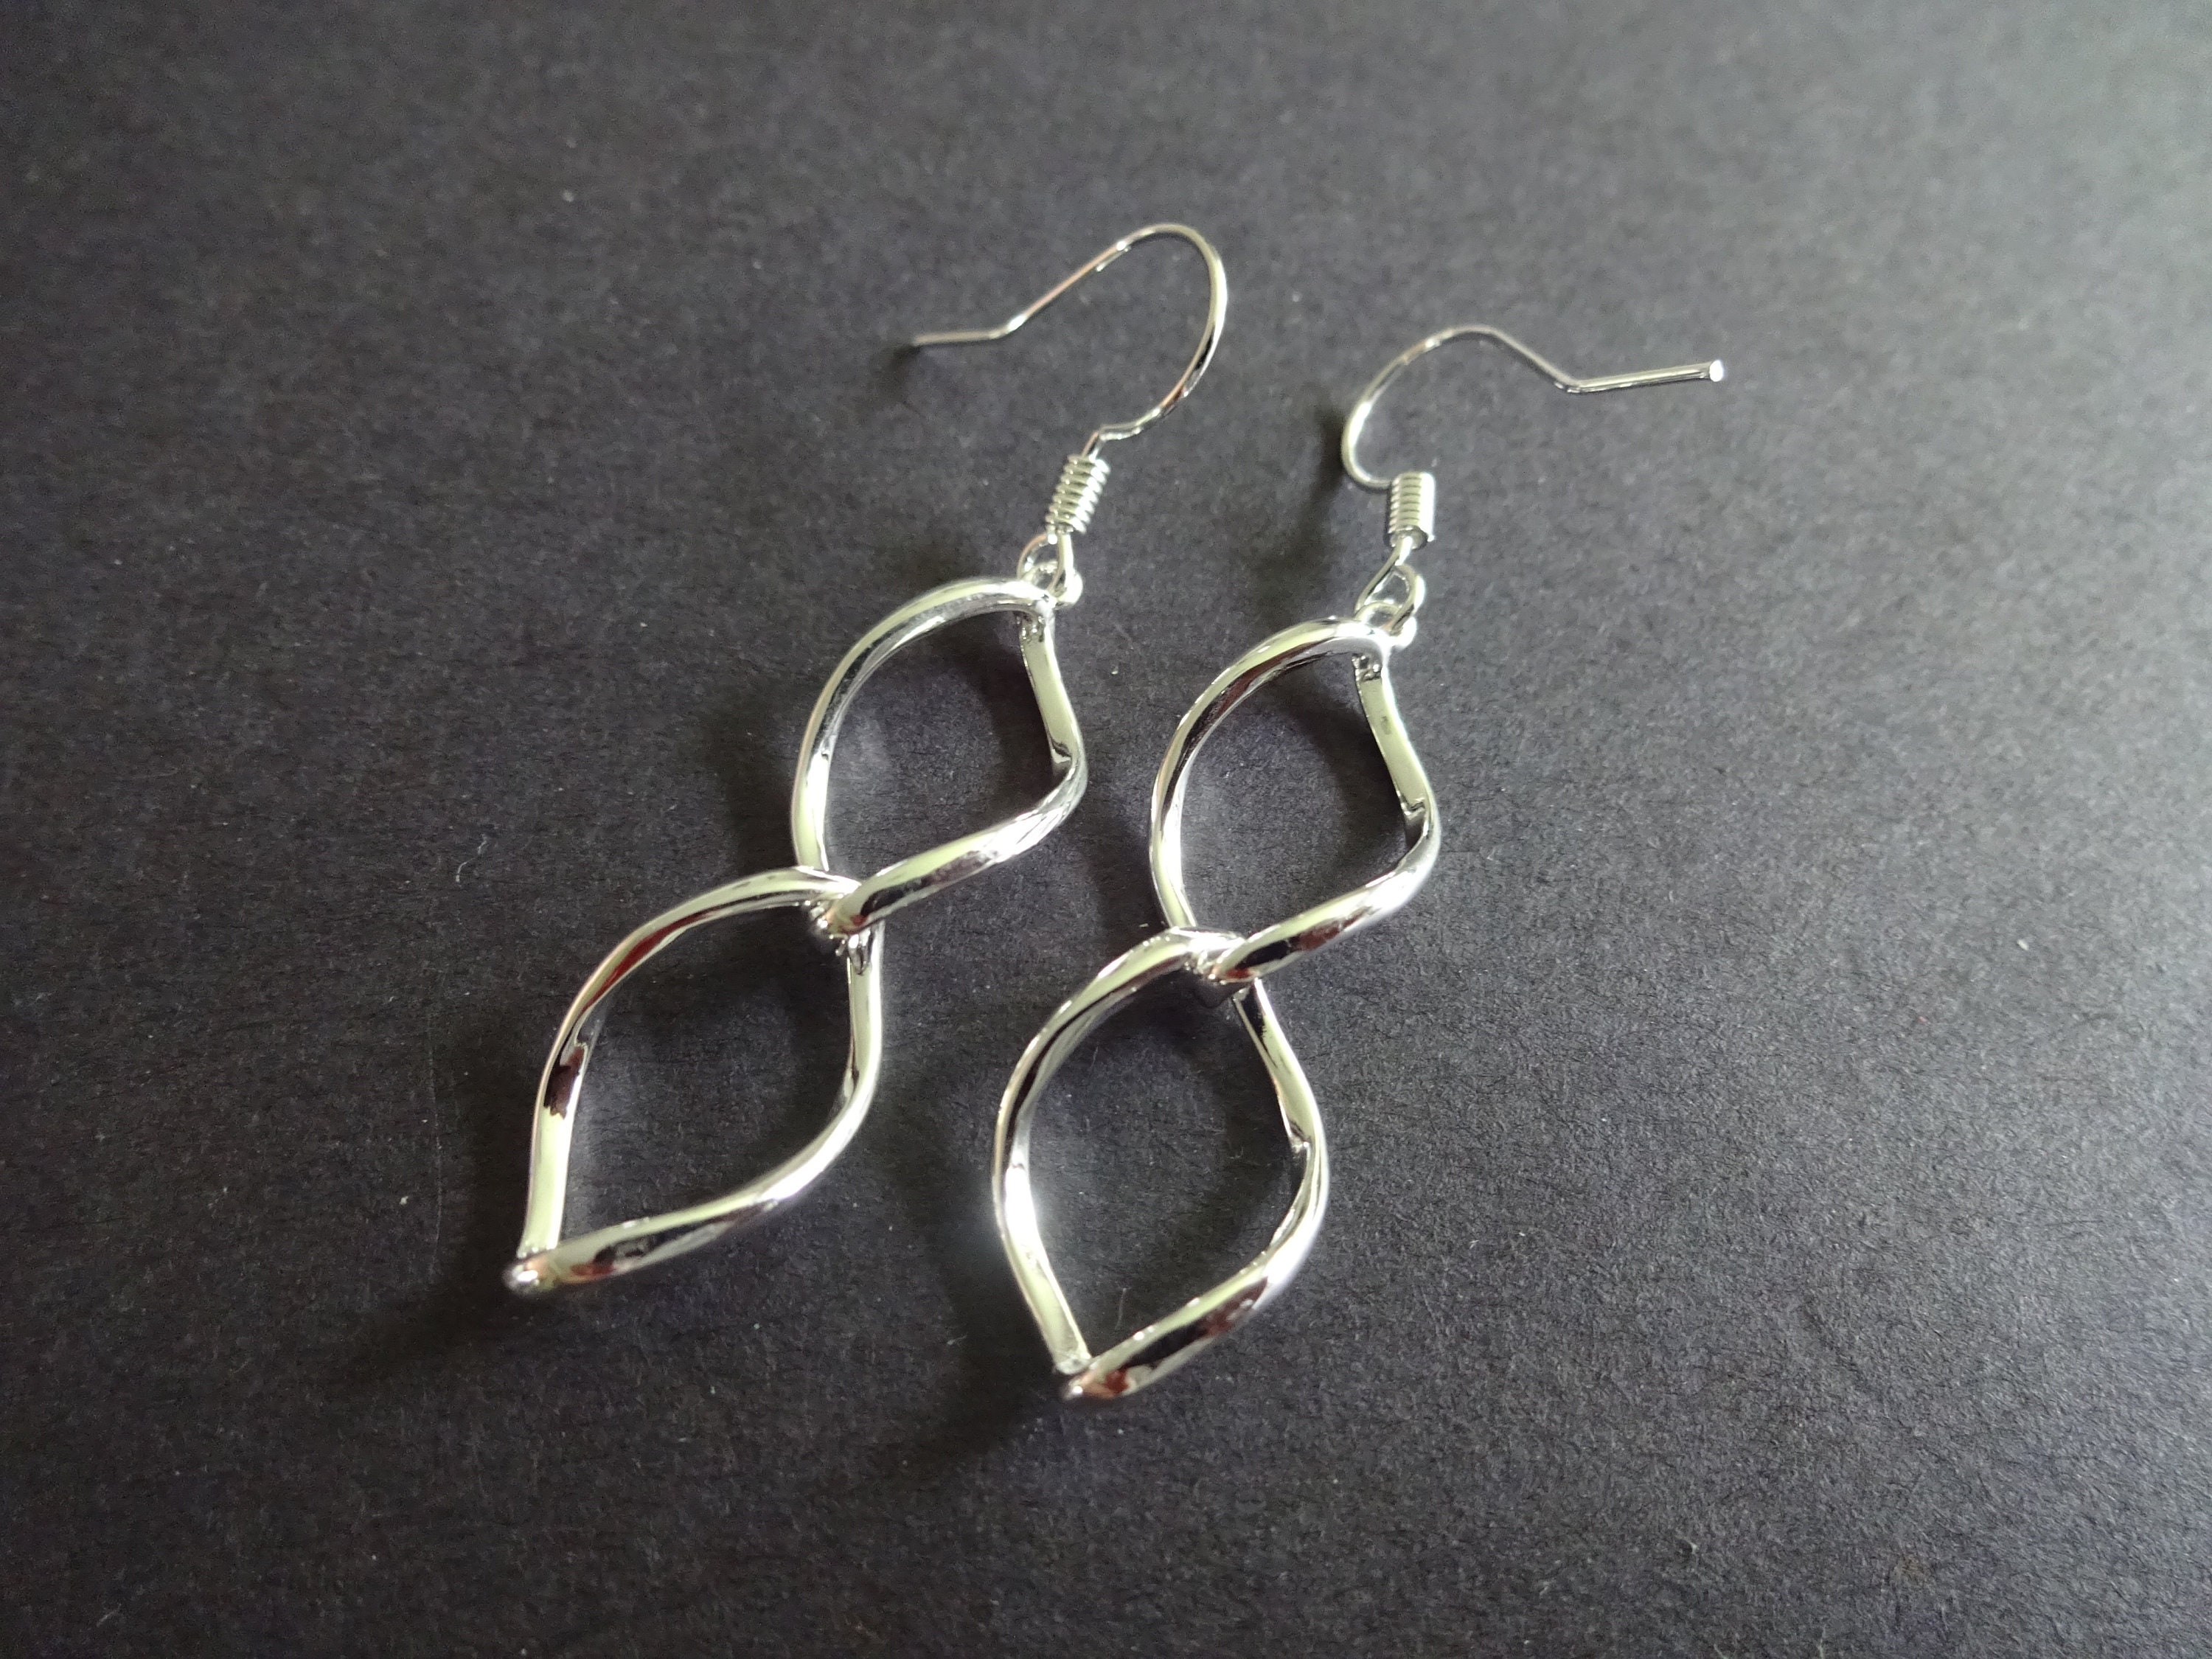 Dangle Brass Earrings, Silver Color Metal, Fish Hook Style, Twisted Curved  Design, Dangling Pair Of Earrings For Pierced Ears, Women's